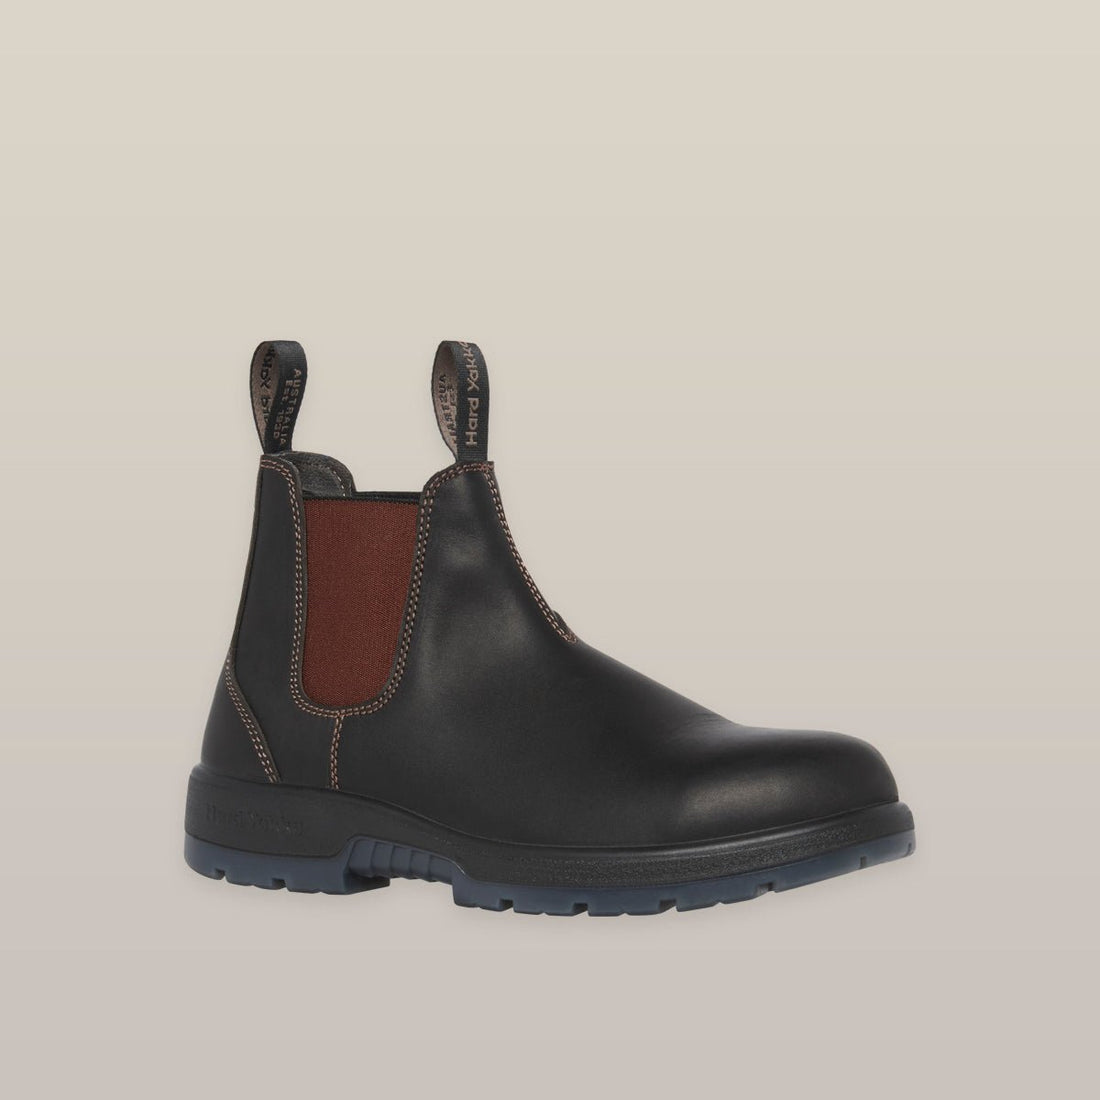 Hard Yakka BRUMBY - Non Safety - BIG Boots UK